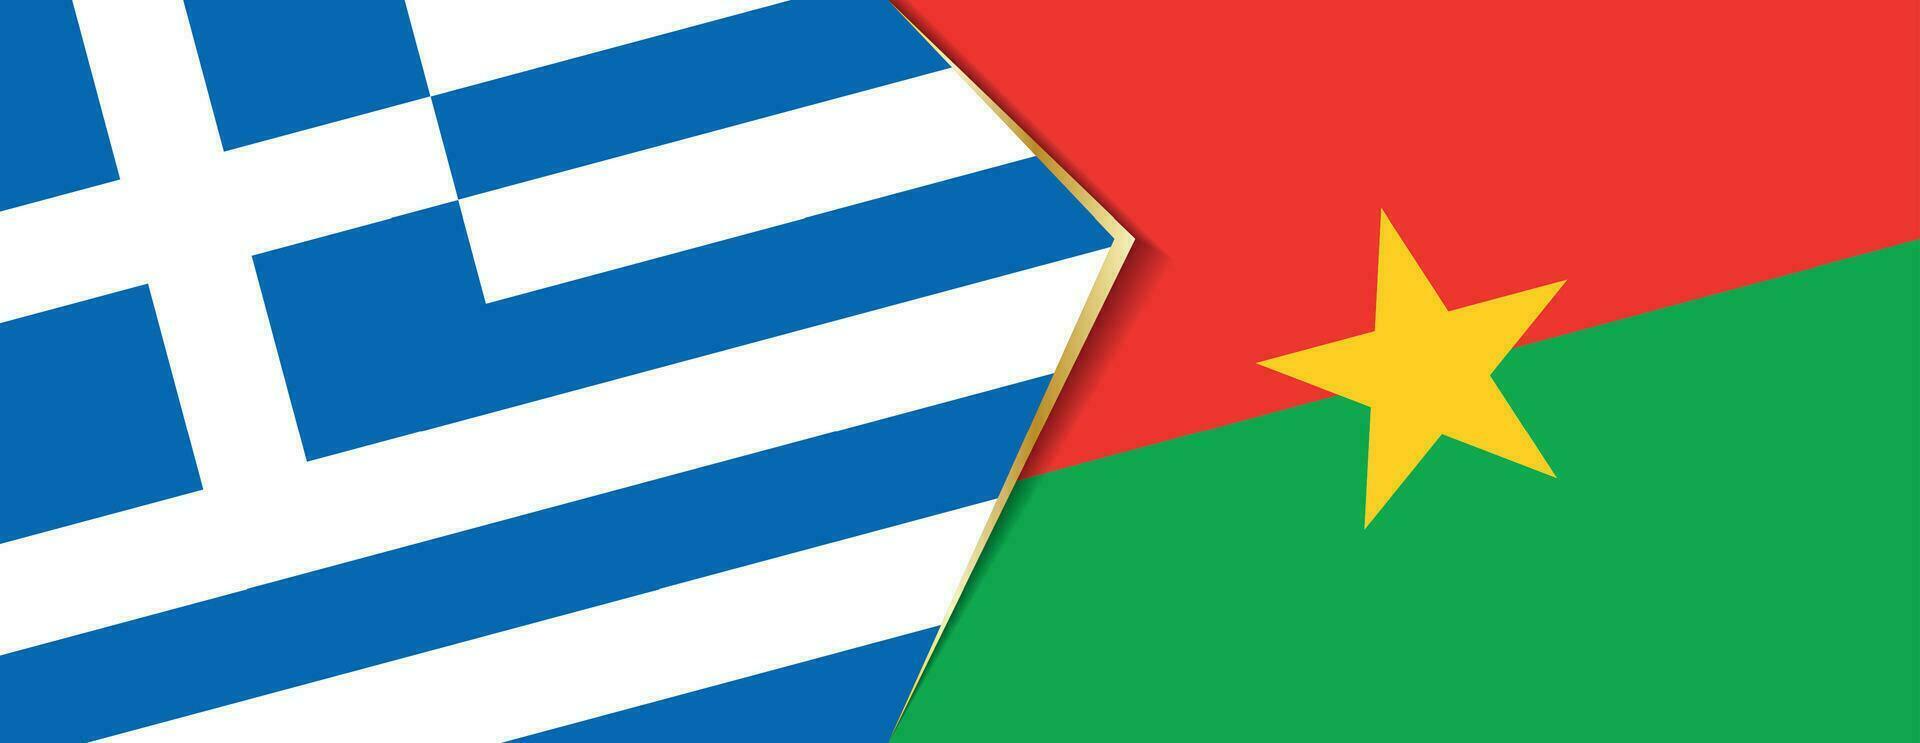 Griekenland en Burkina faso vlaggen, twee vector vlaggen.